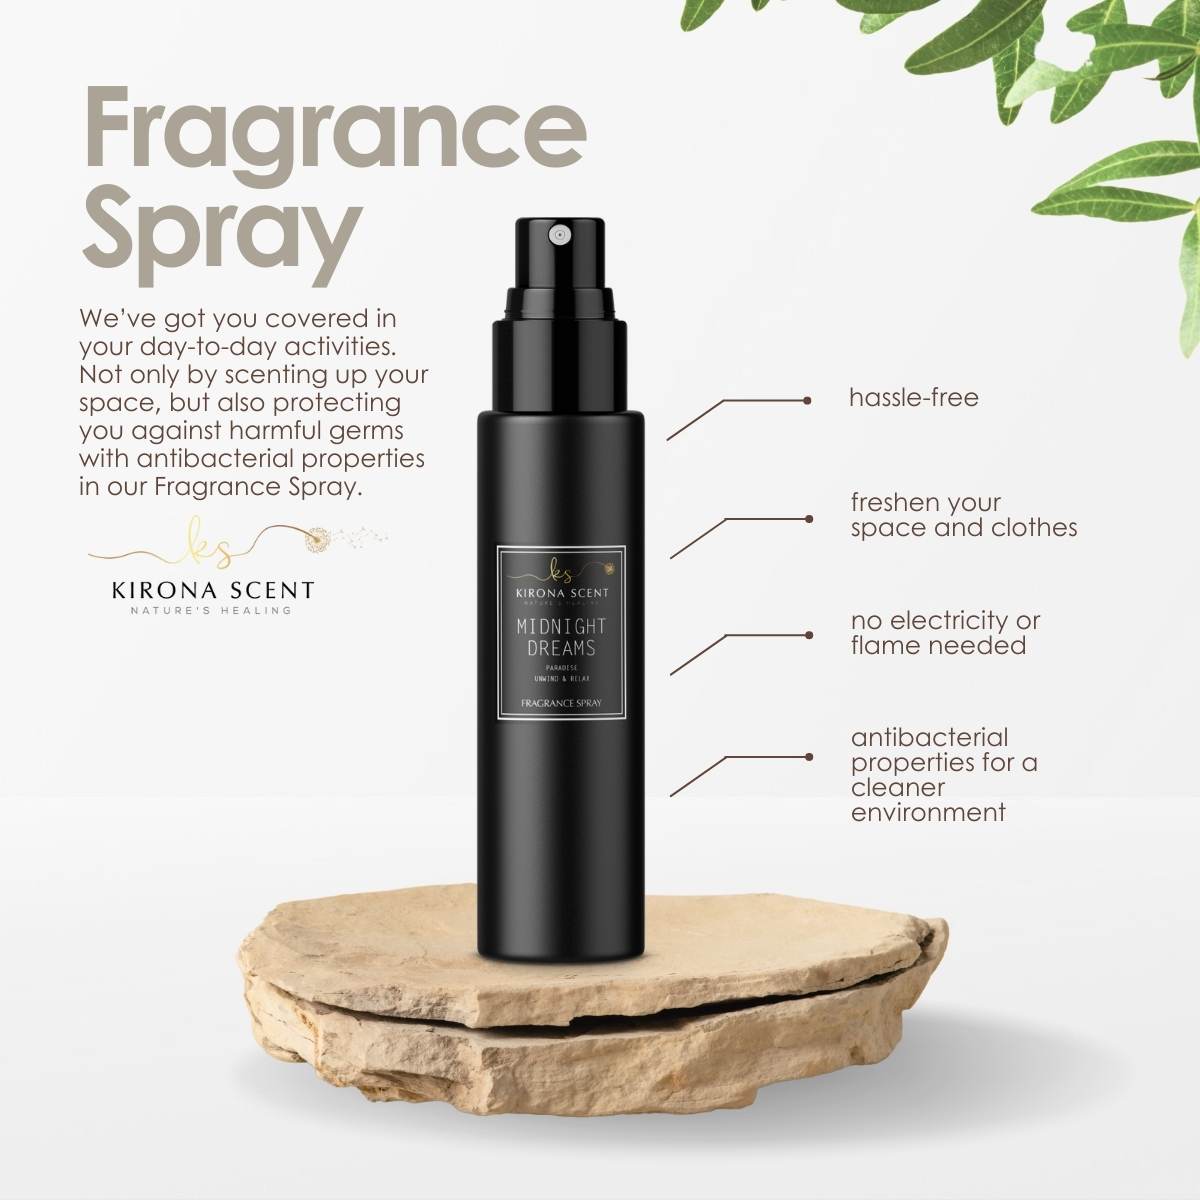 Fragrance Spray - Exquisite